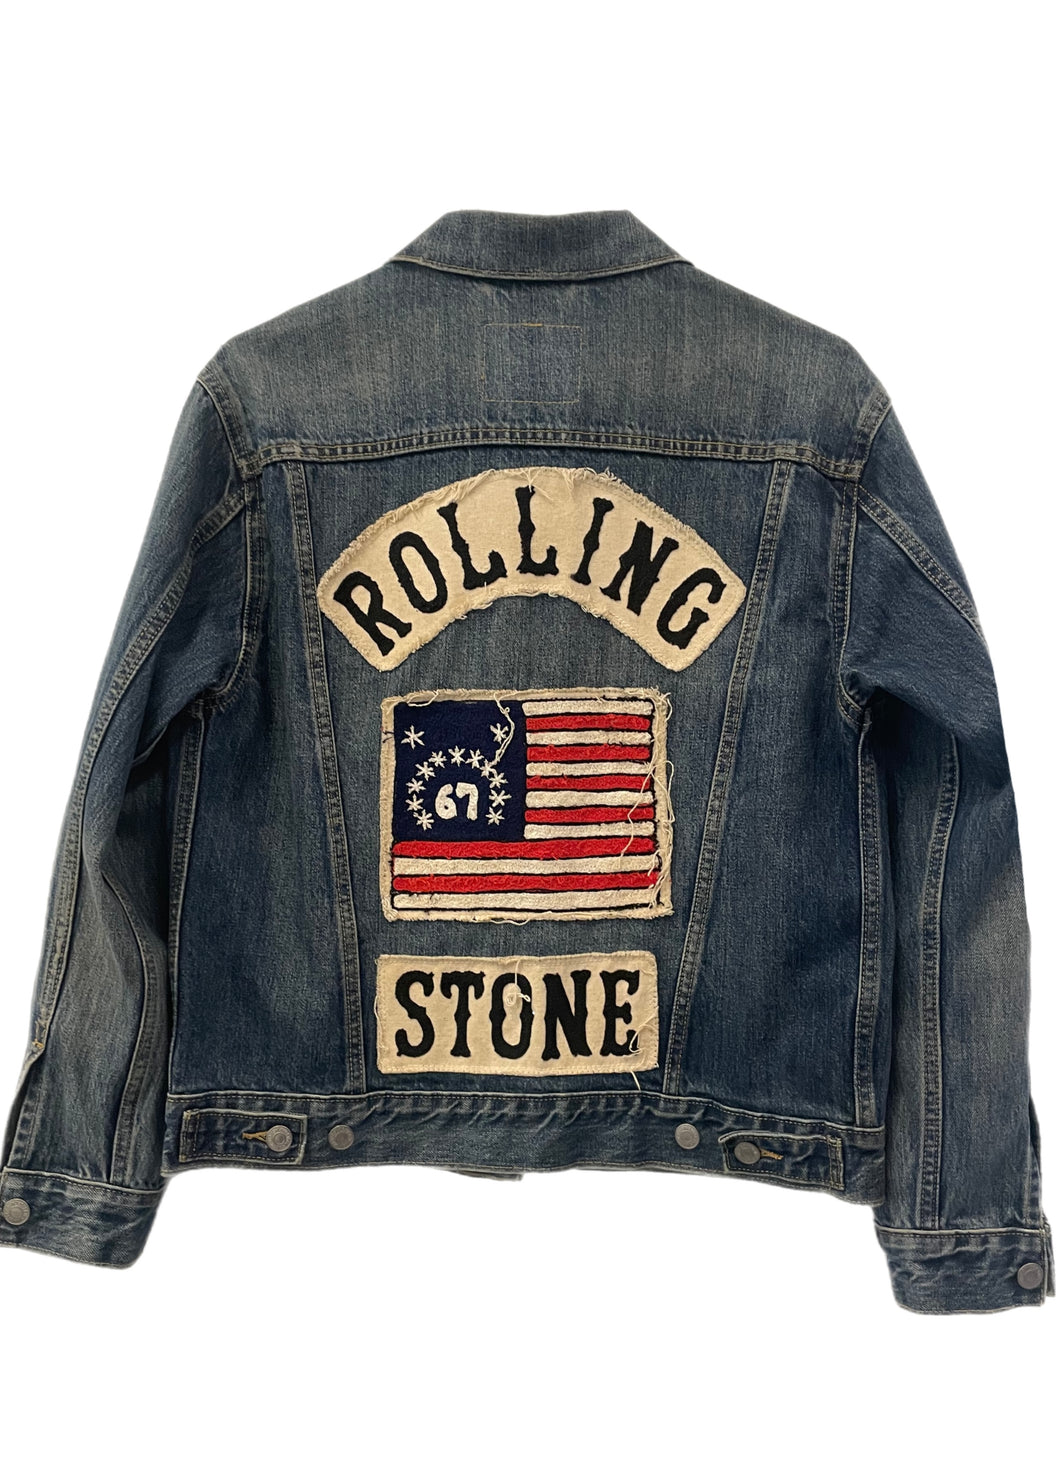 The Rolling Stones, One of a KIND Vintage Denim Jacket with Crystal Star Design